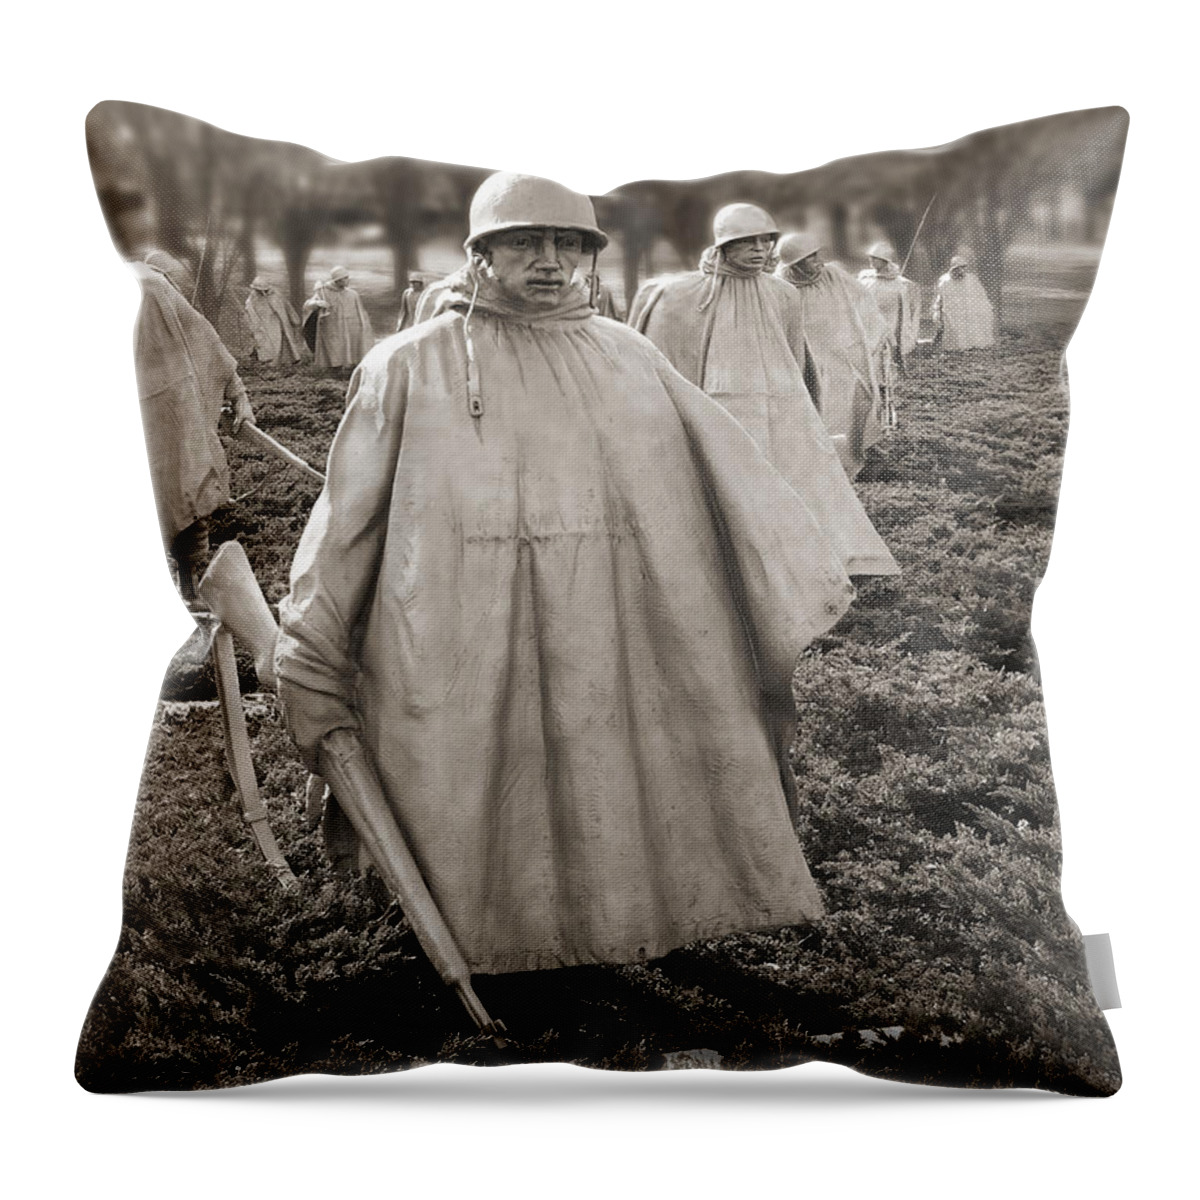 Korean War Memorial Throw Pillow featuring the photograph Korean War Memorial - Washington D.C. by Mike McGlothlen